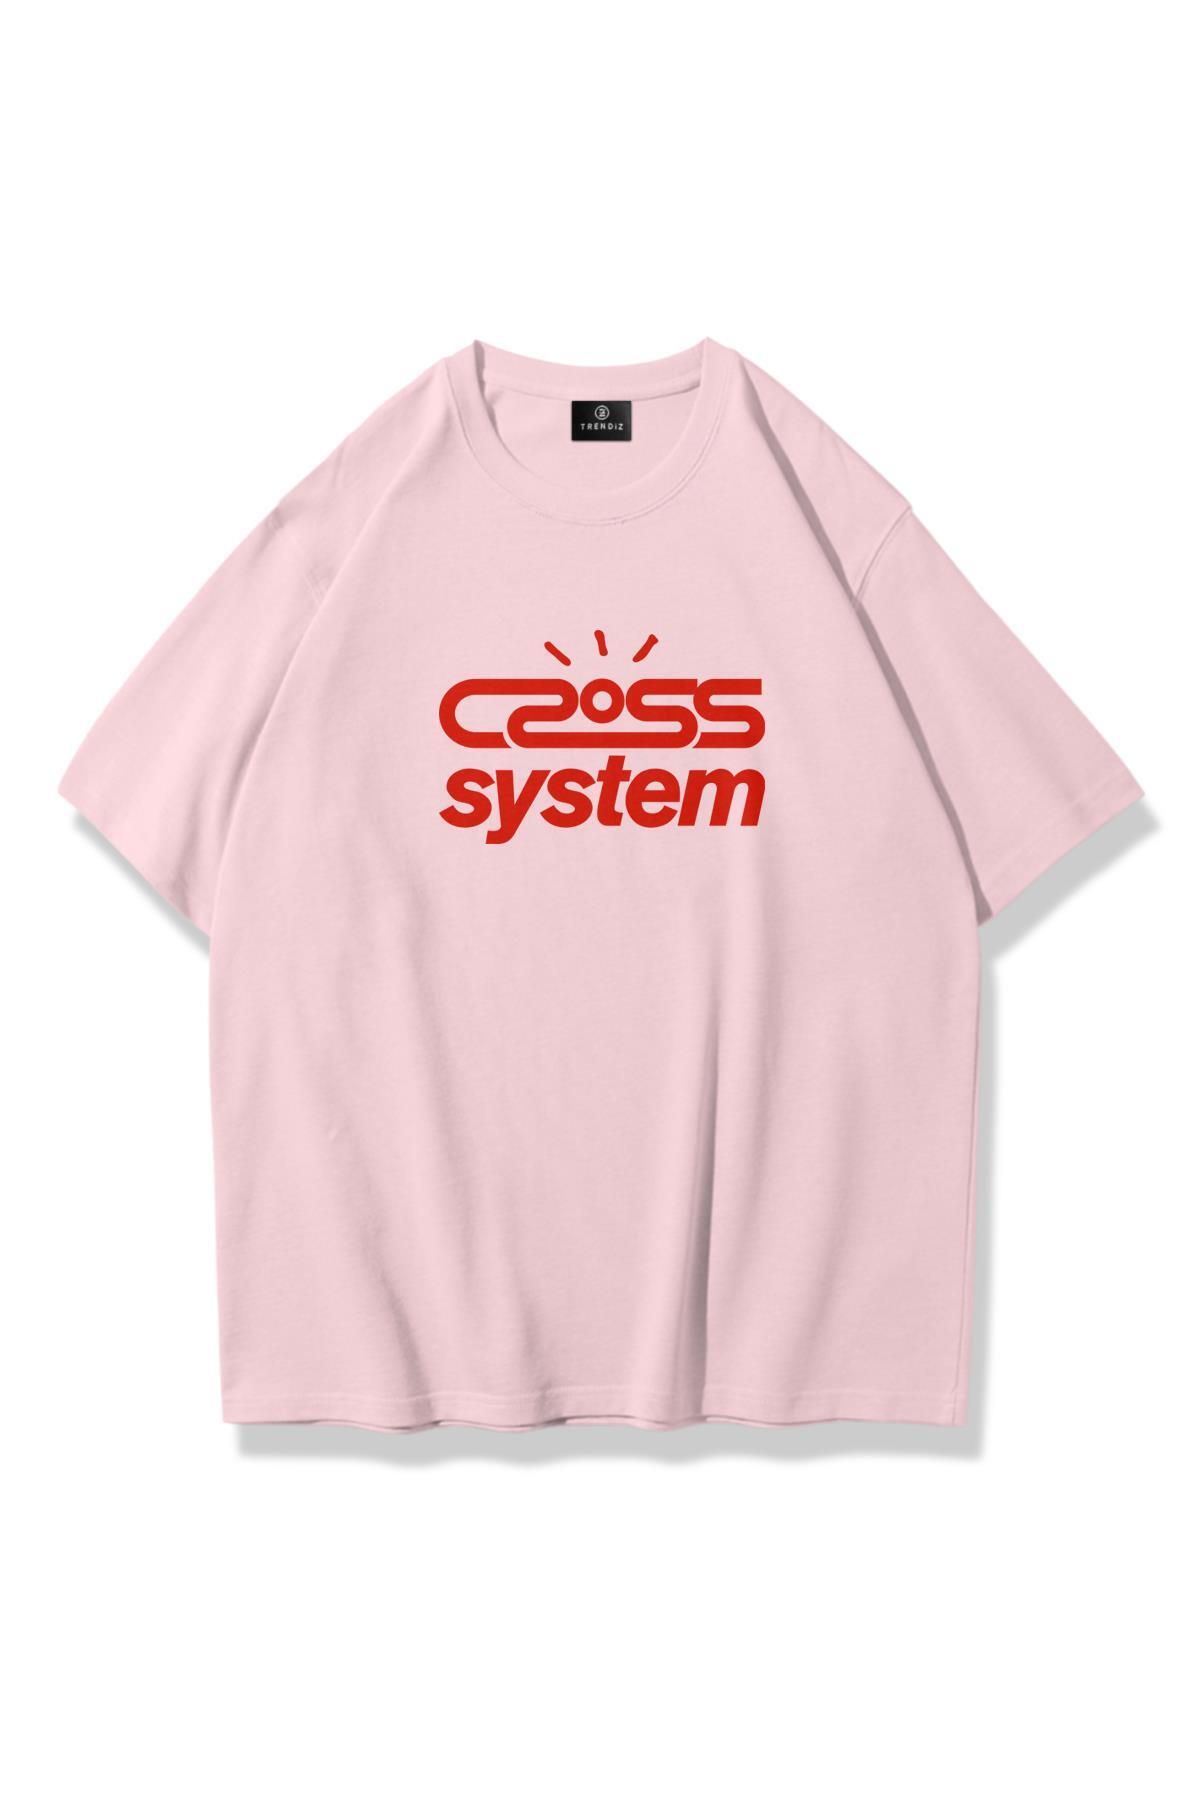 Trendiz Unisex Cross System Tshirt Pembe